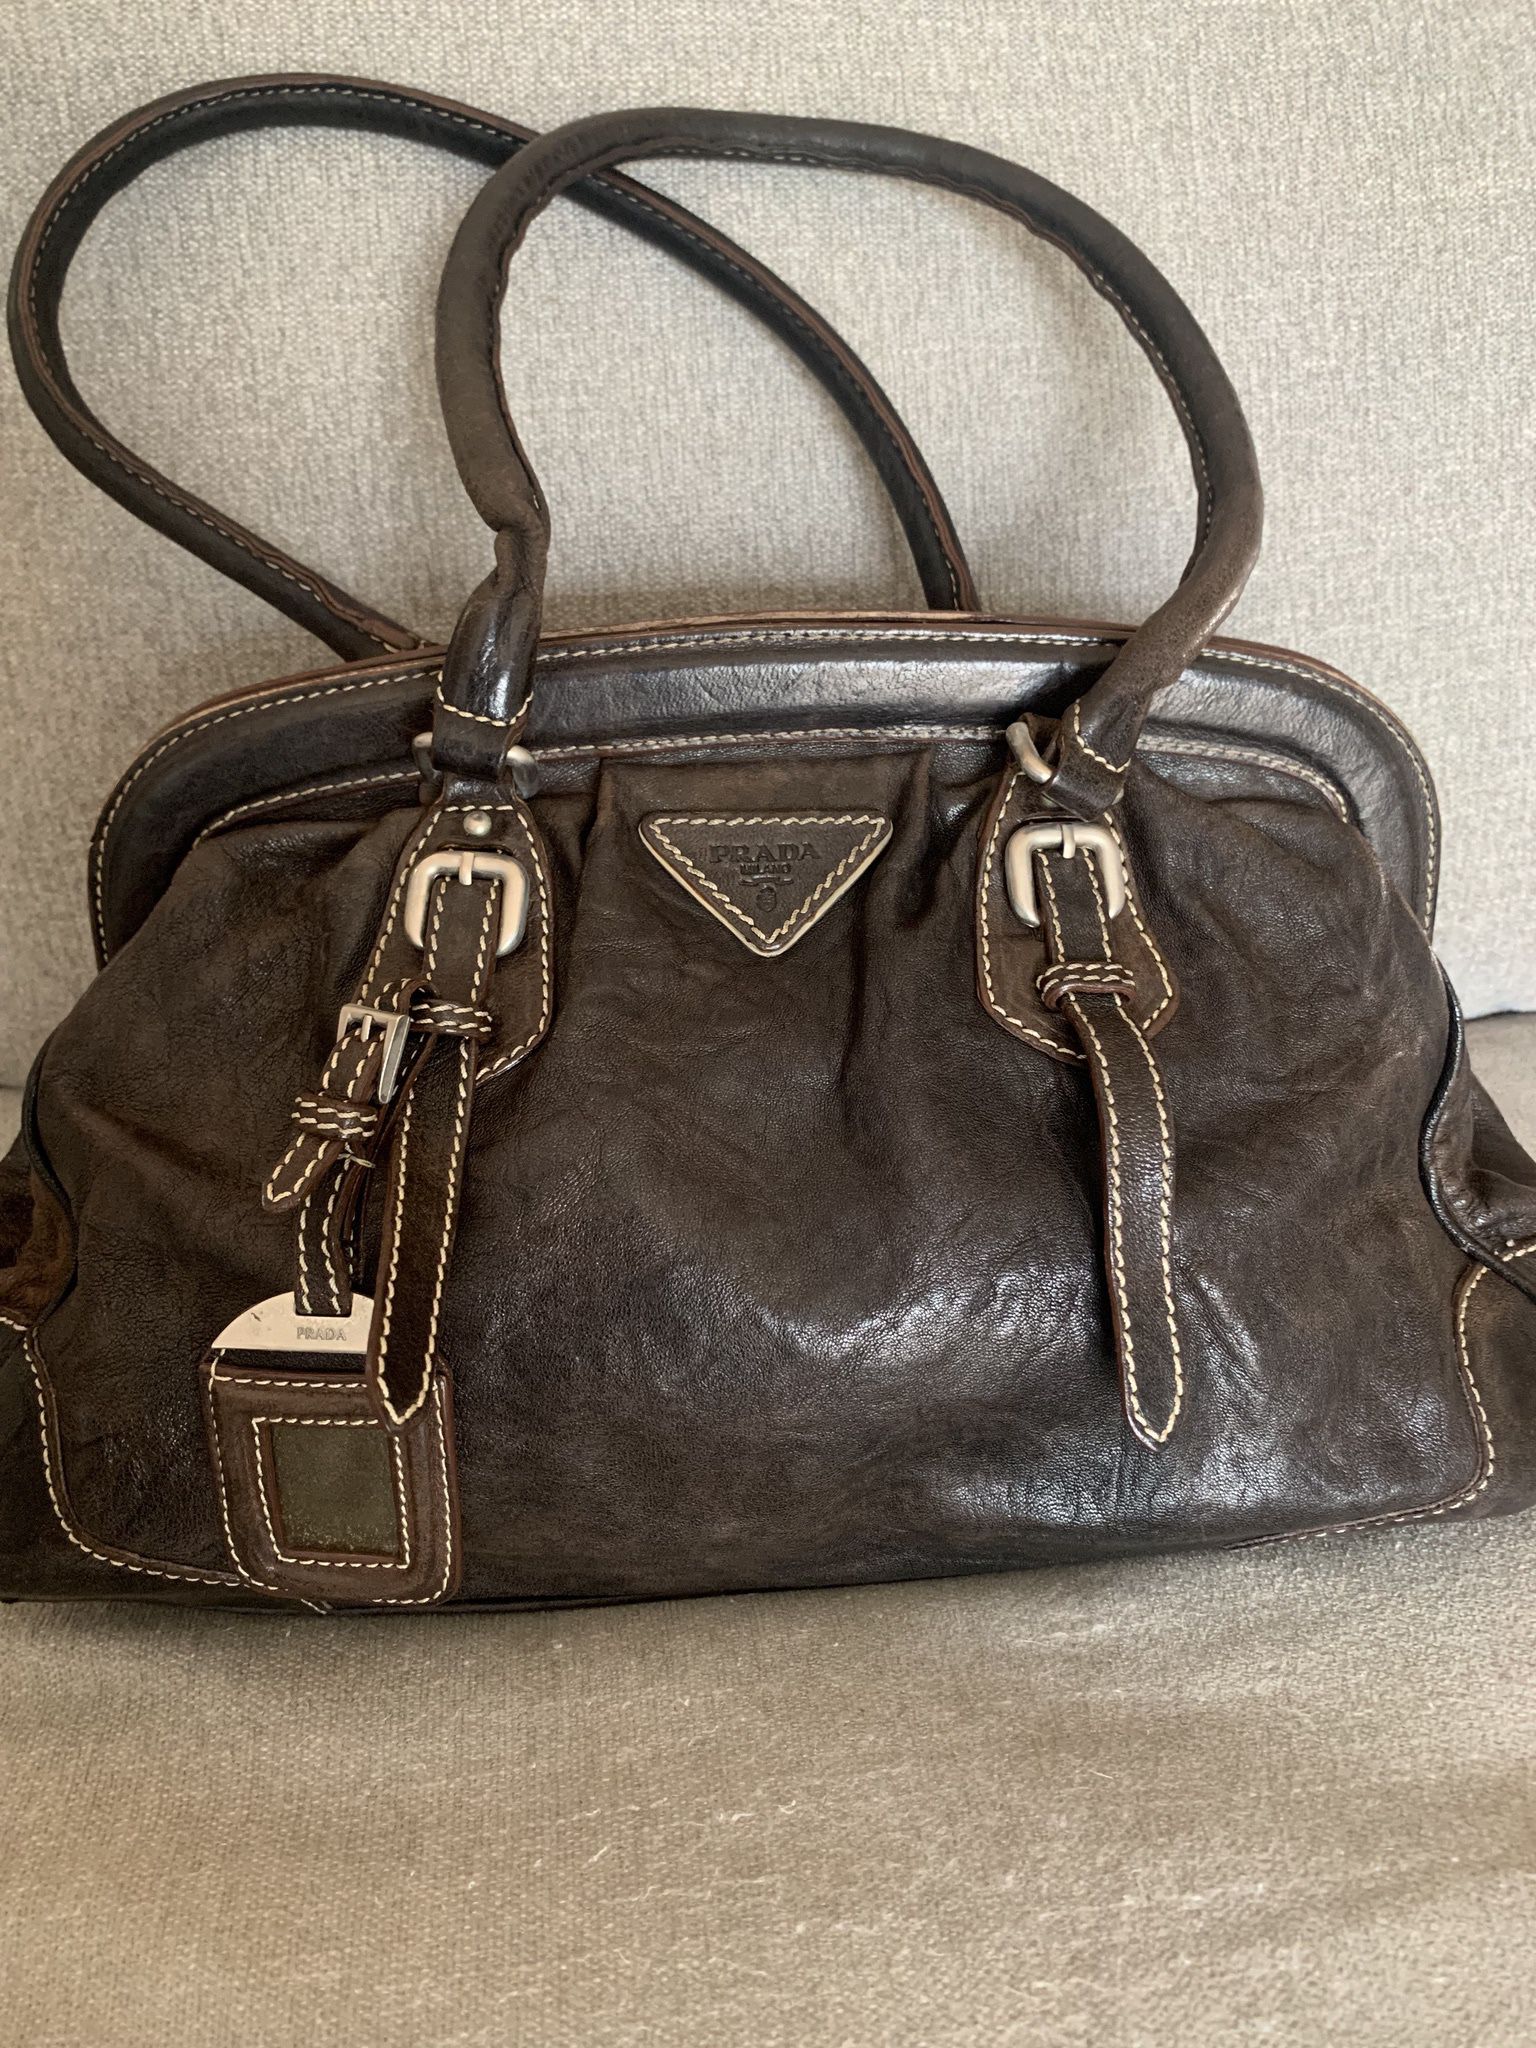 Prada Vintage dark brown leather doctor or bowling bag